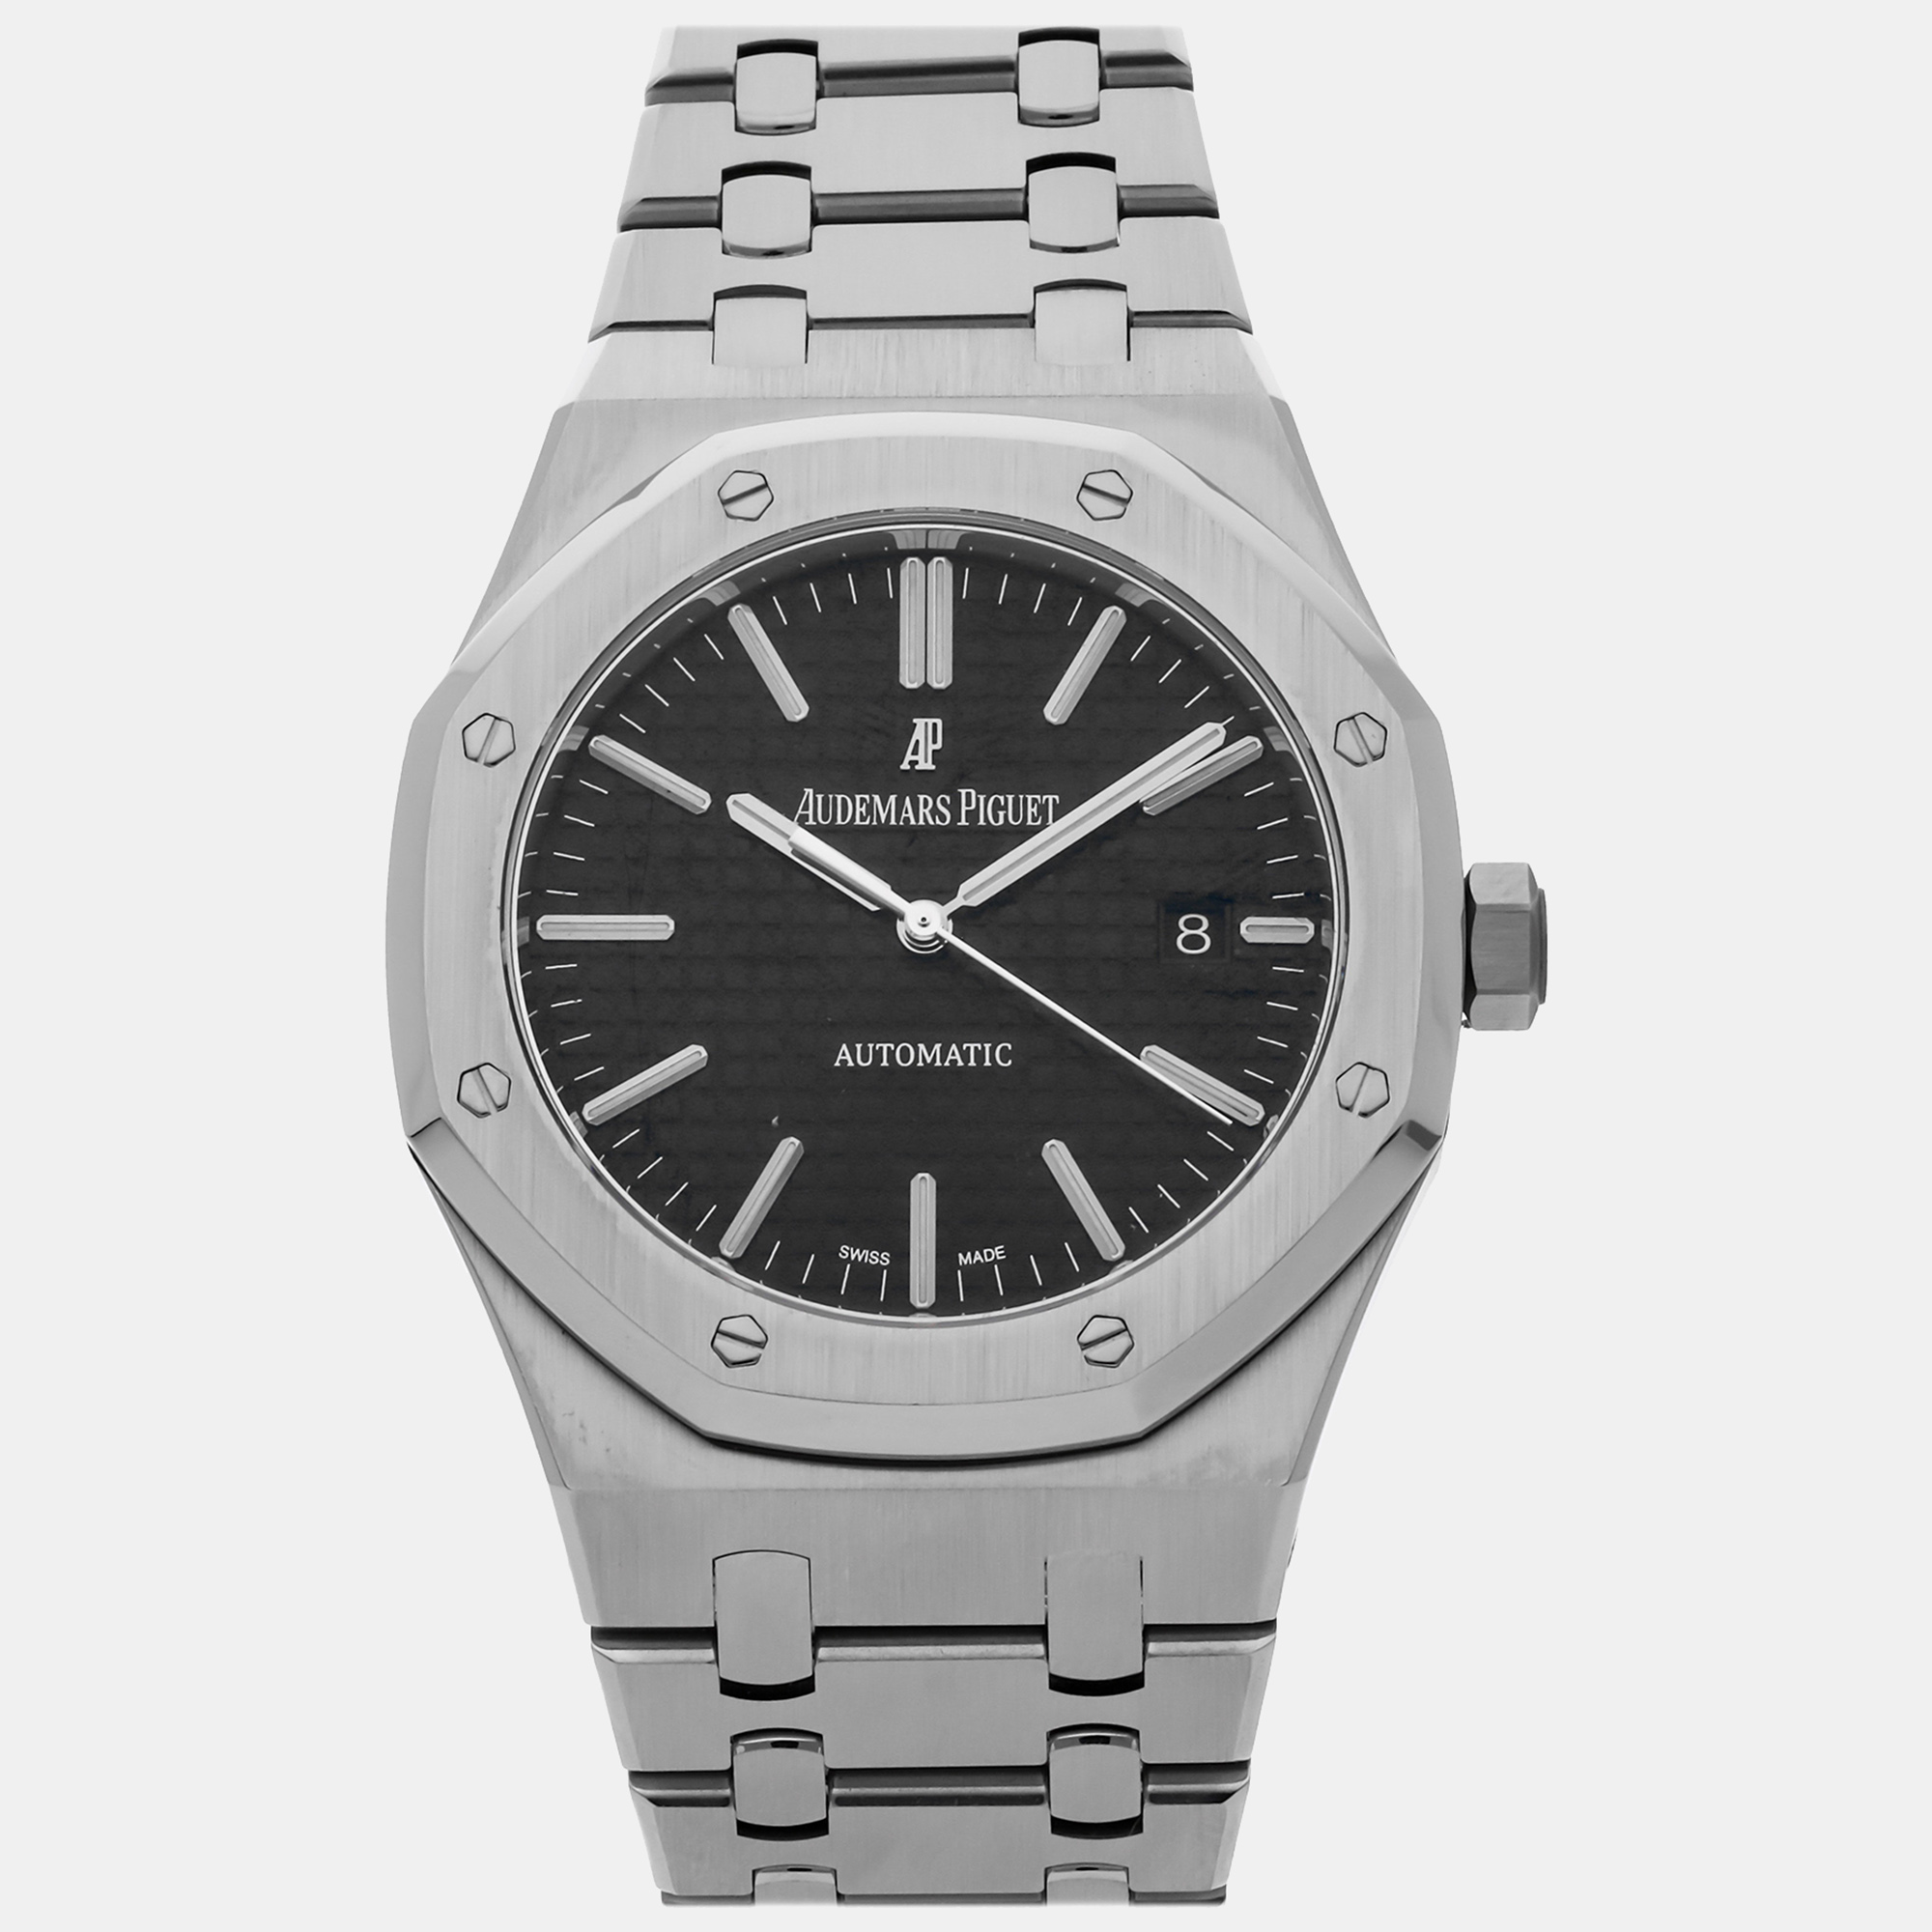 Audemars piguet black stainless steel royal oak 15400st.oo.1220st.01 automatic men's wristwatch 41 mm